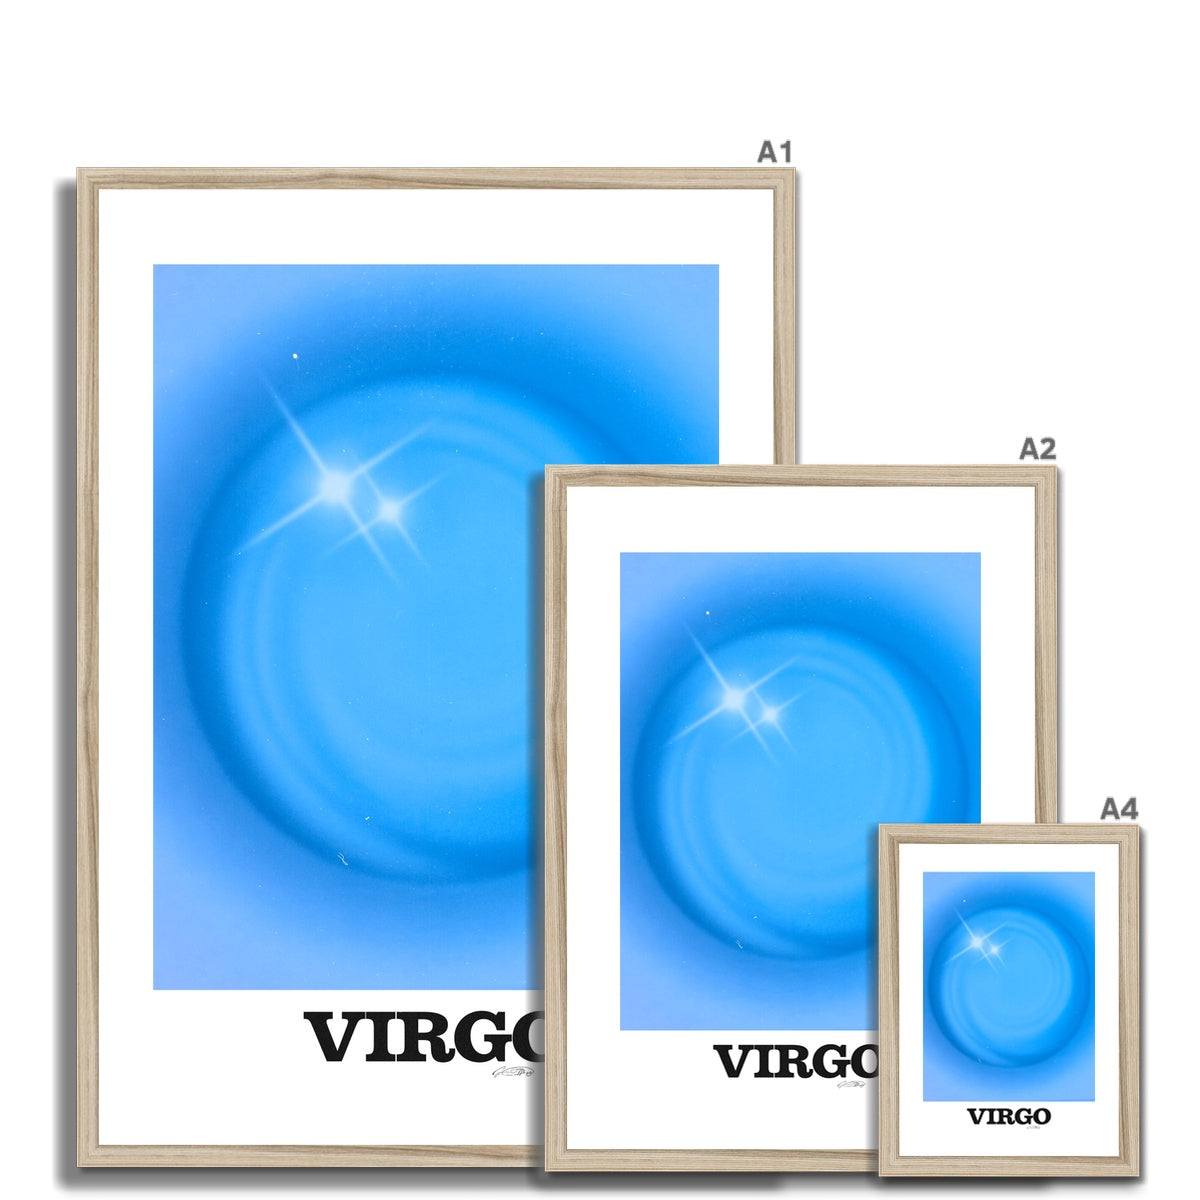 virgo aura Framed & Mounted Print